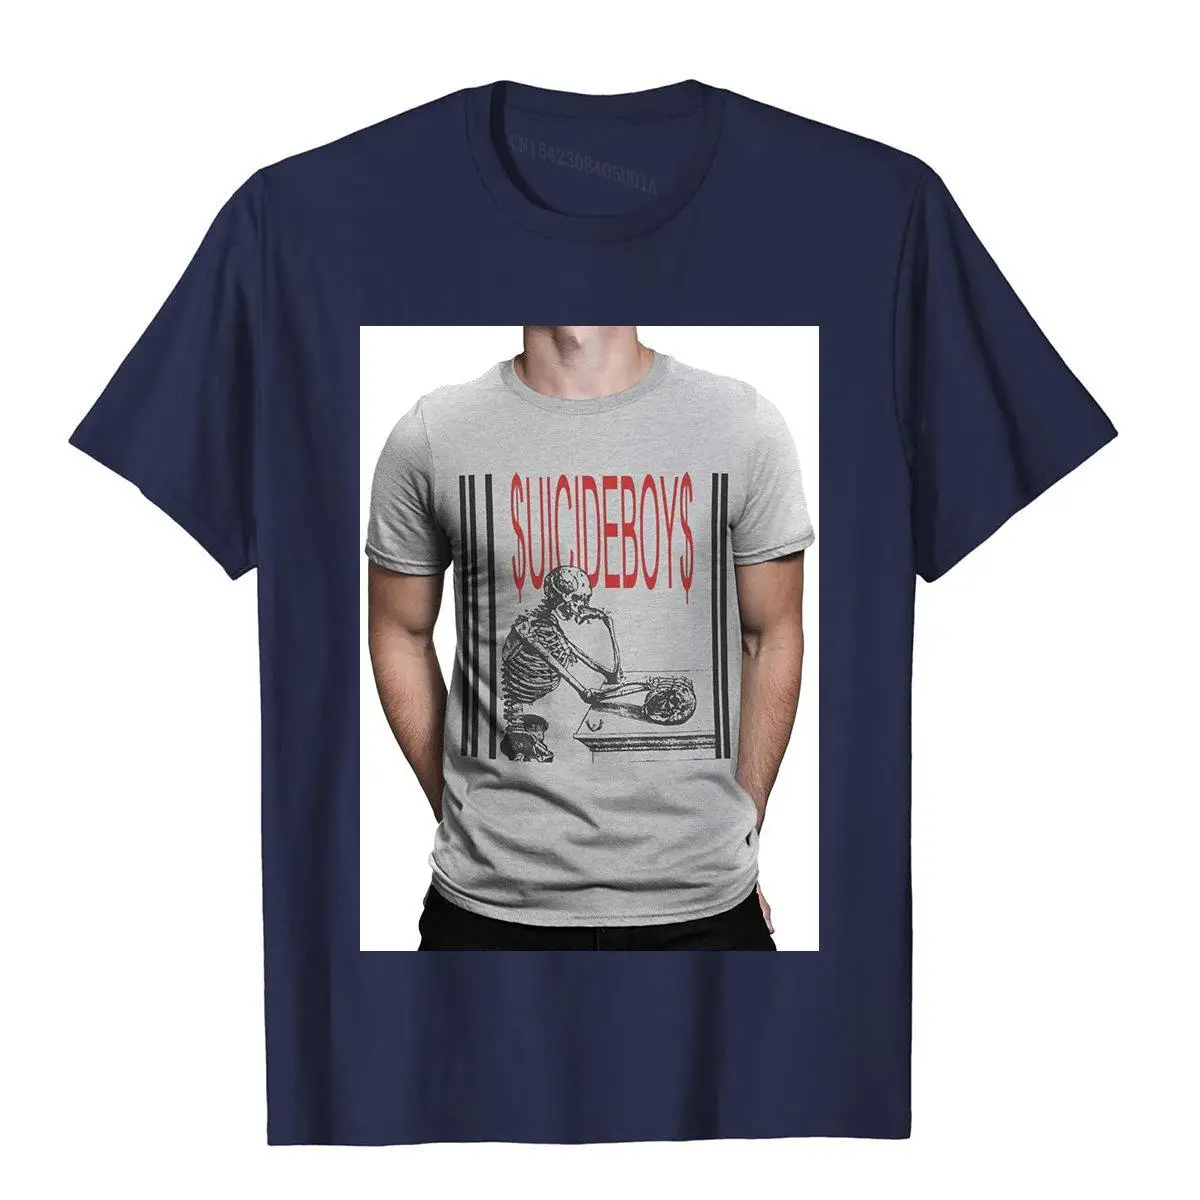 Suicide Boys T-Shirt SUICIDEBOYS Rap Hip-Hop Shirt Men's Tee__B12276navy